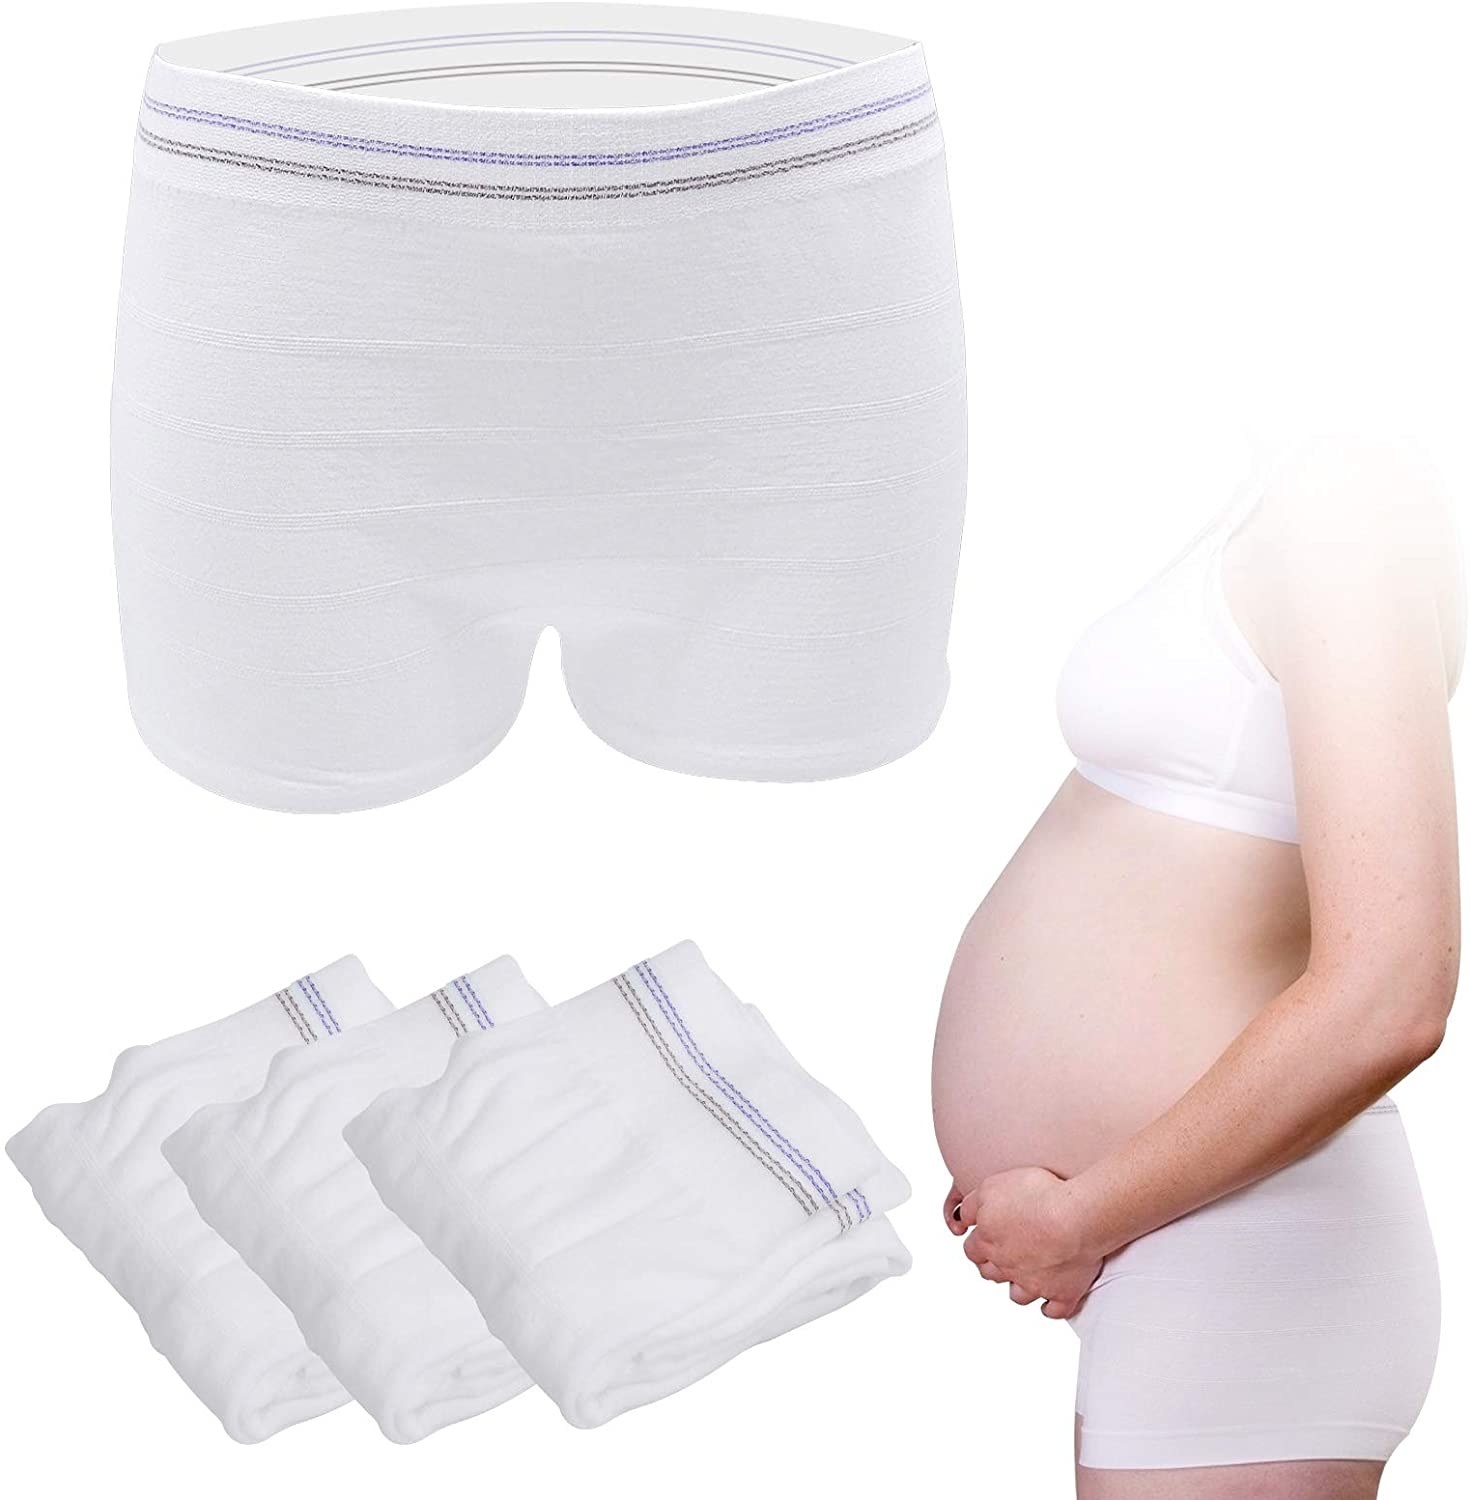 13 Best Pairs Of Postpartum Underwear For Parents 2022